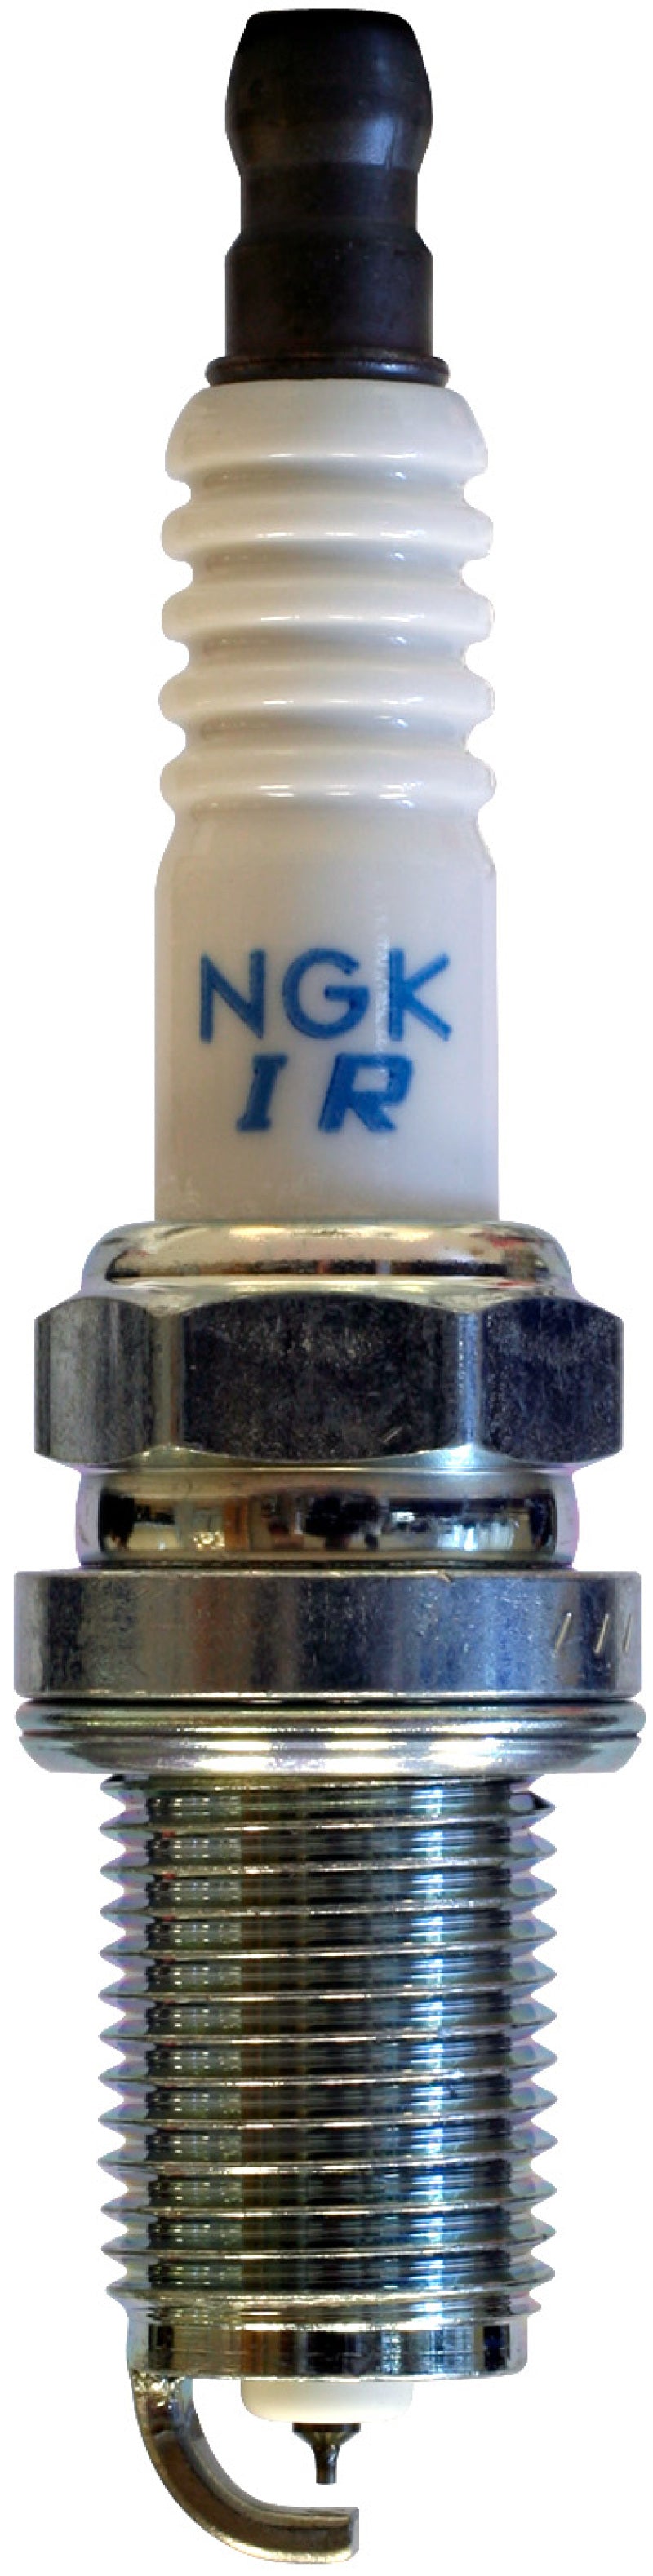 NGK Laser Iridium Spark Plug Box of 4 (IFR6B)